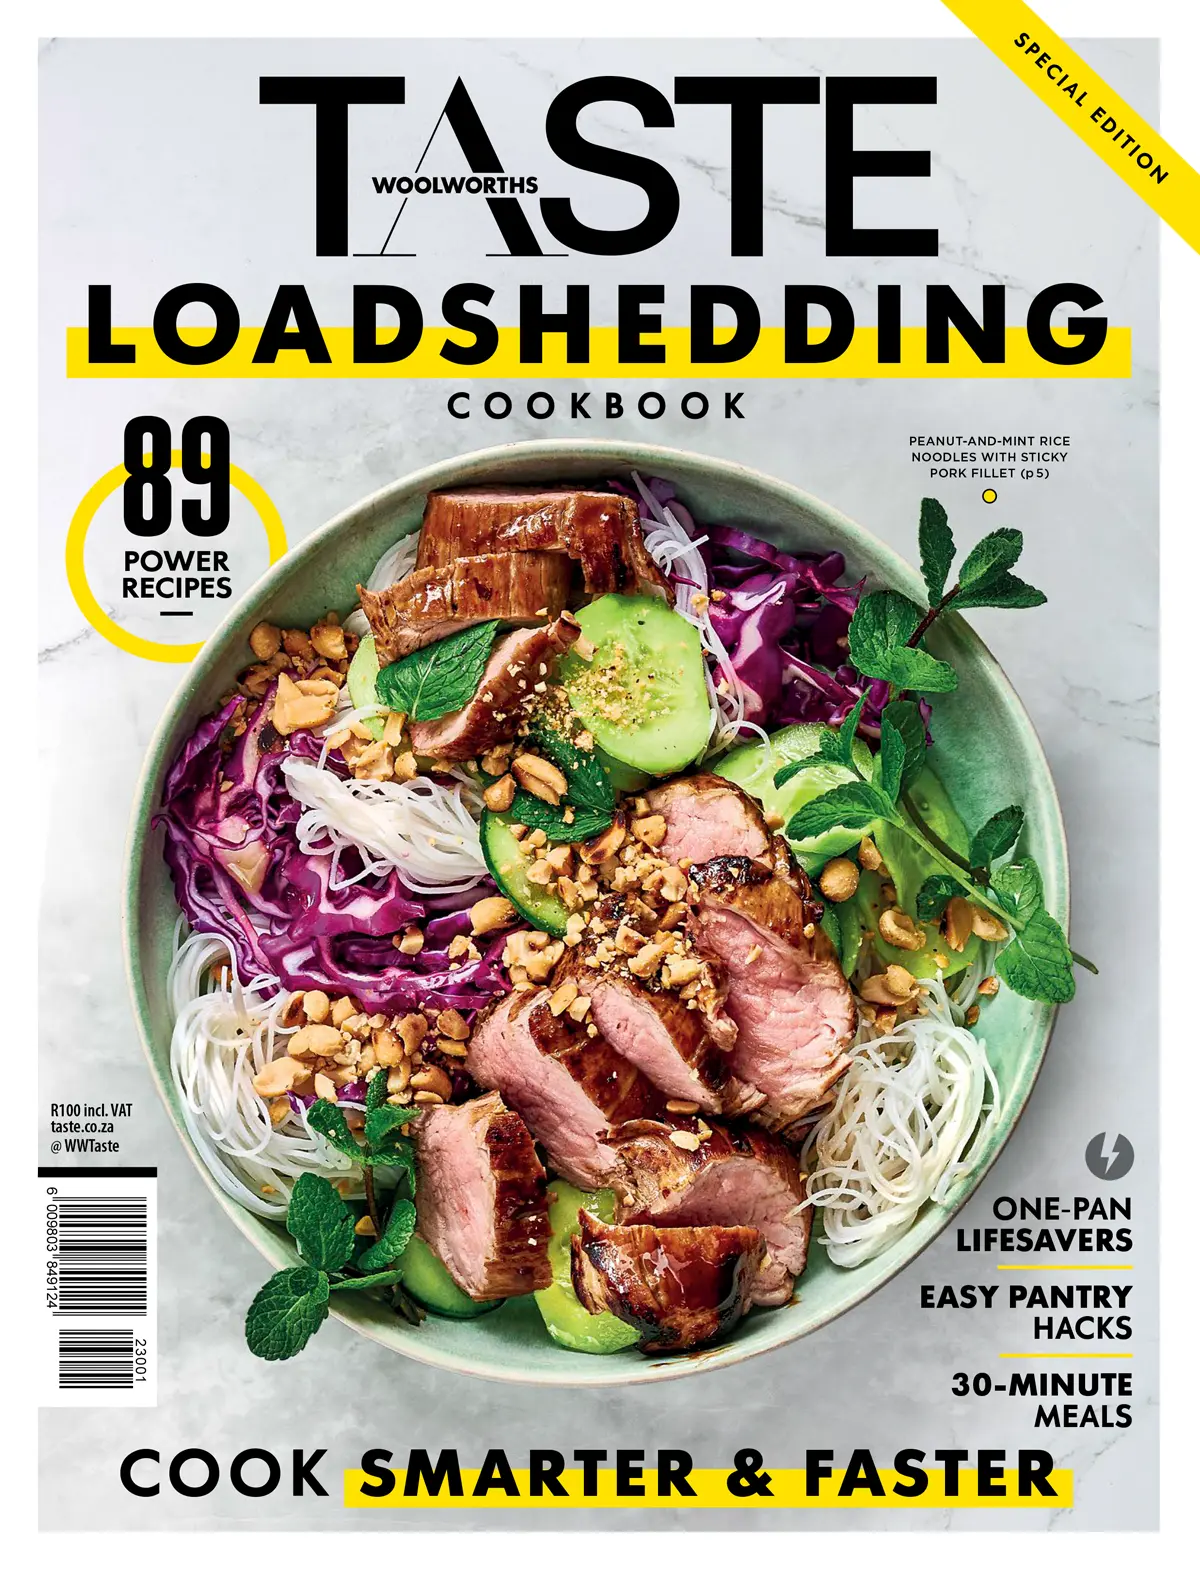 TASTE Loadshedding cookbook